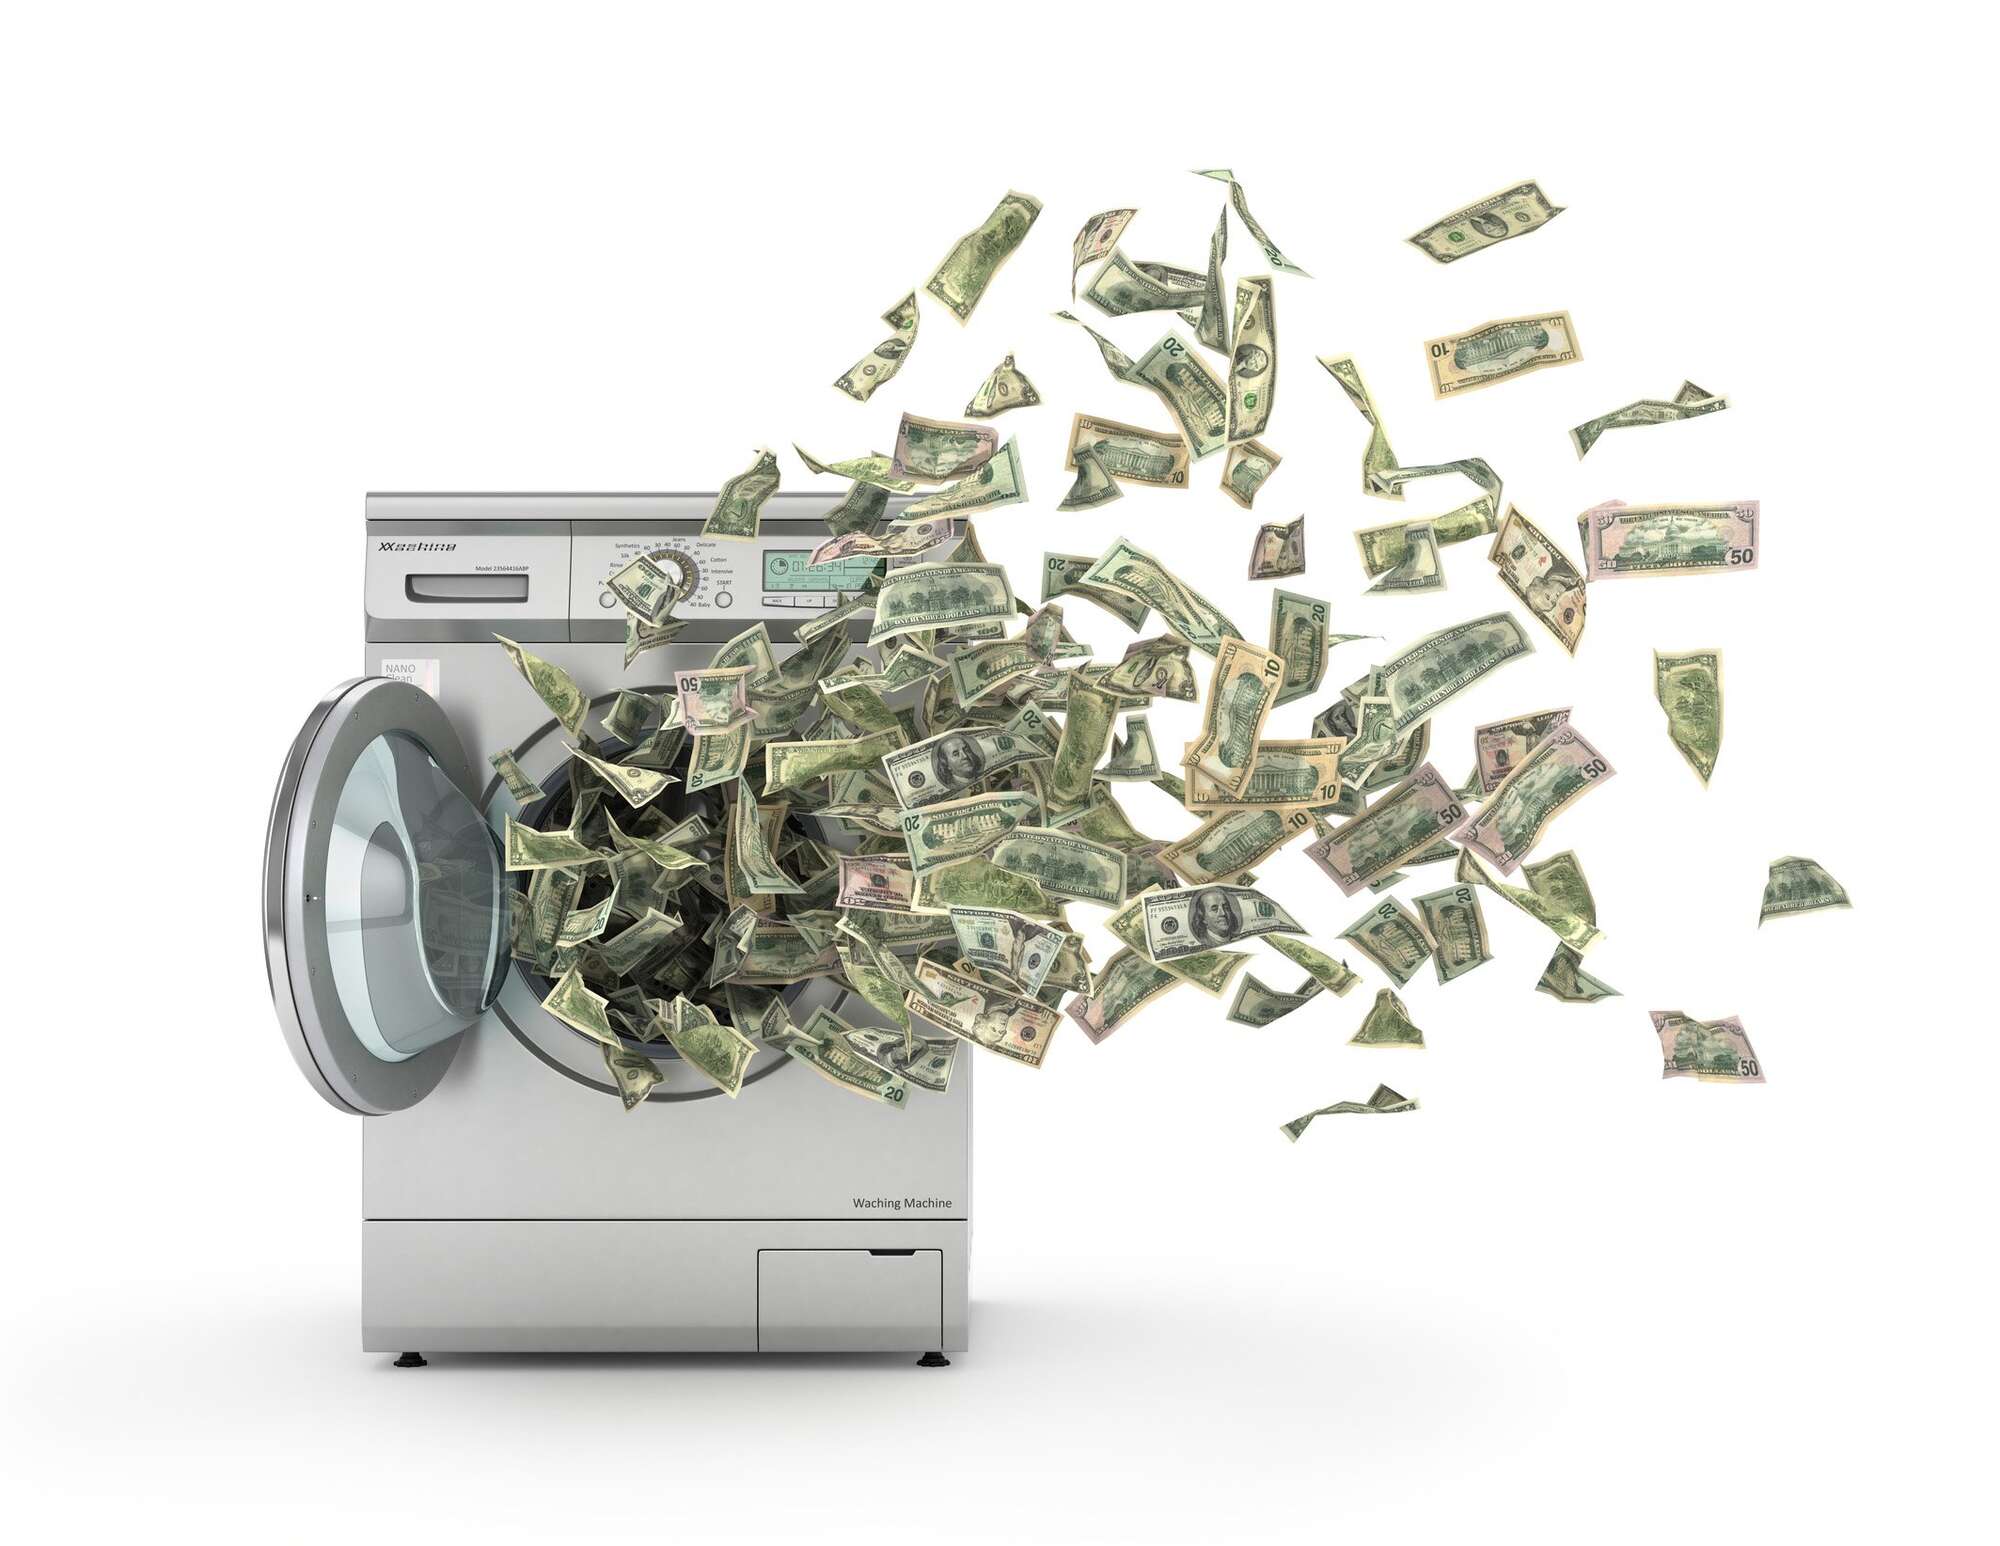 Step up money laundering war